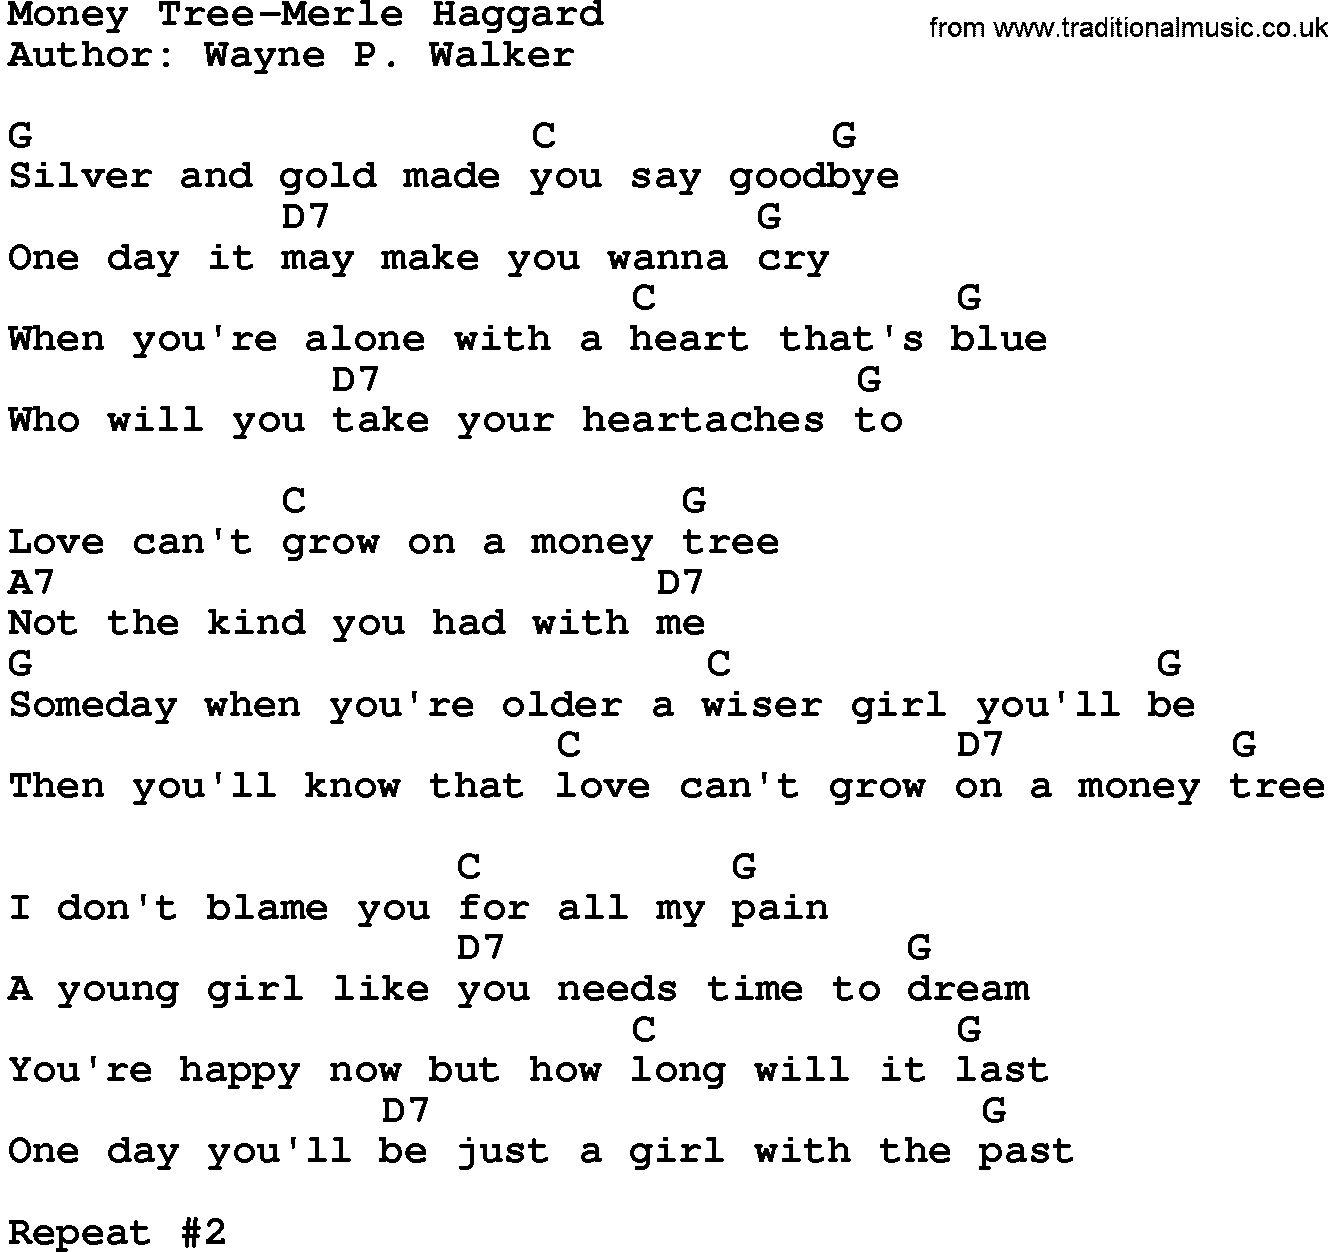 Country music song: Money Tree-Merle Haggard lyrics and chords